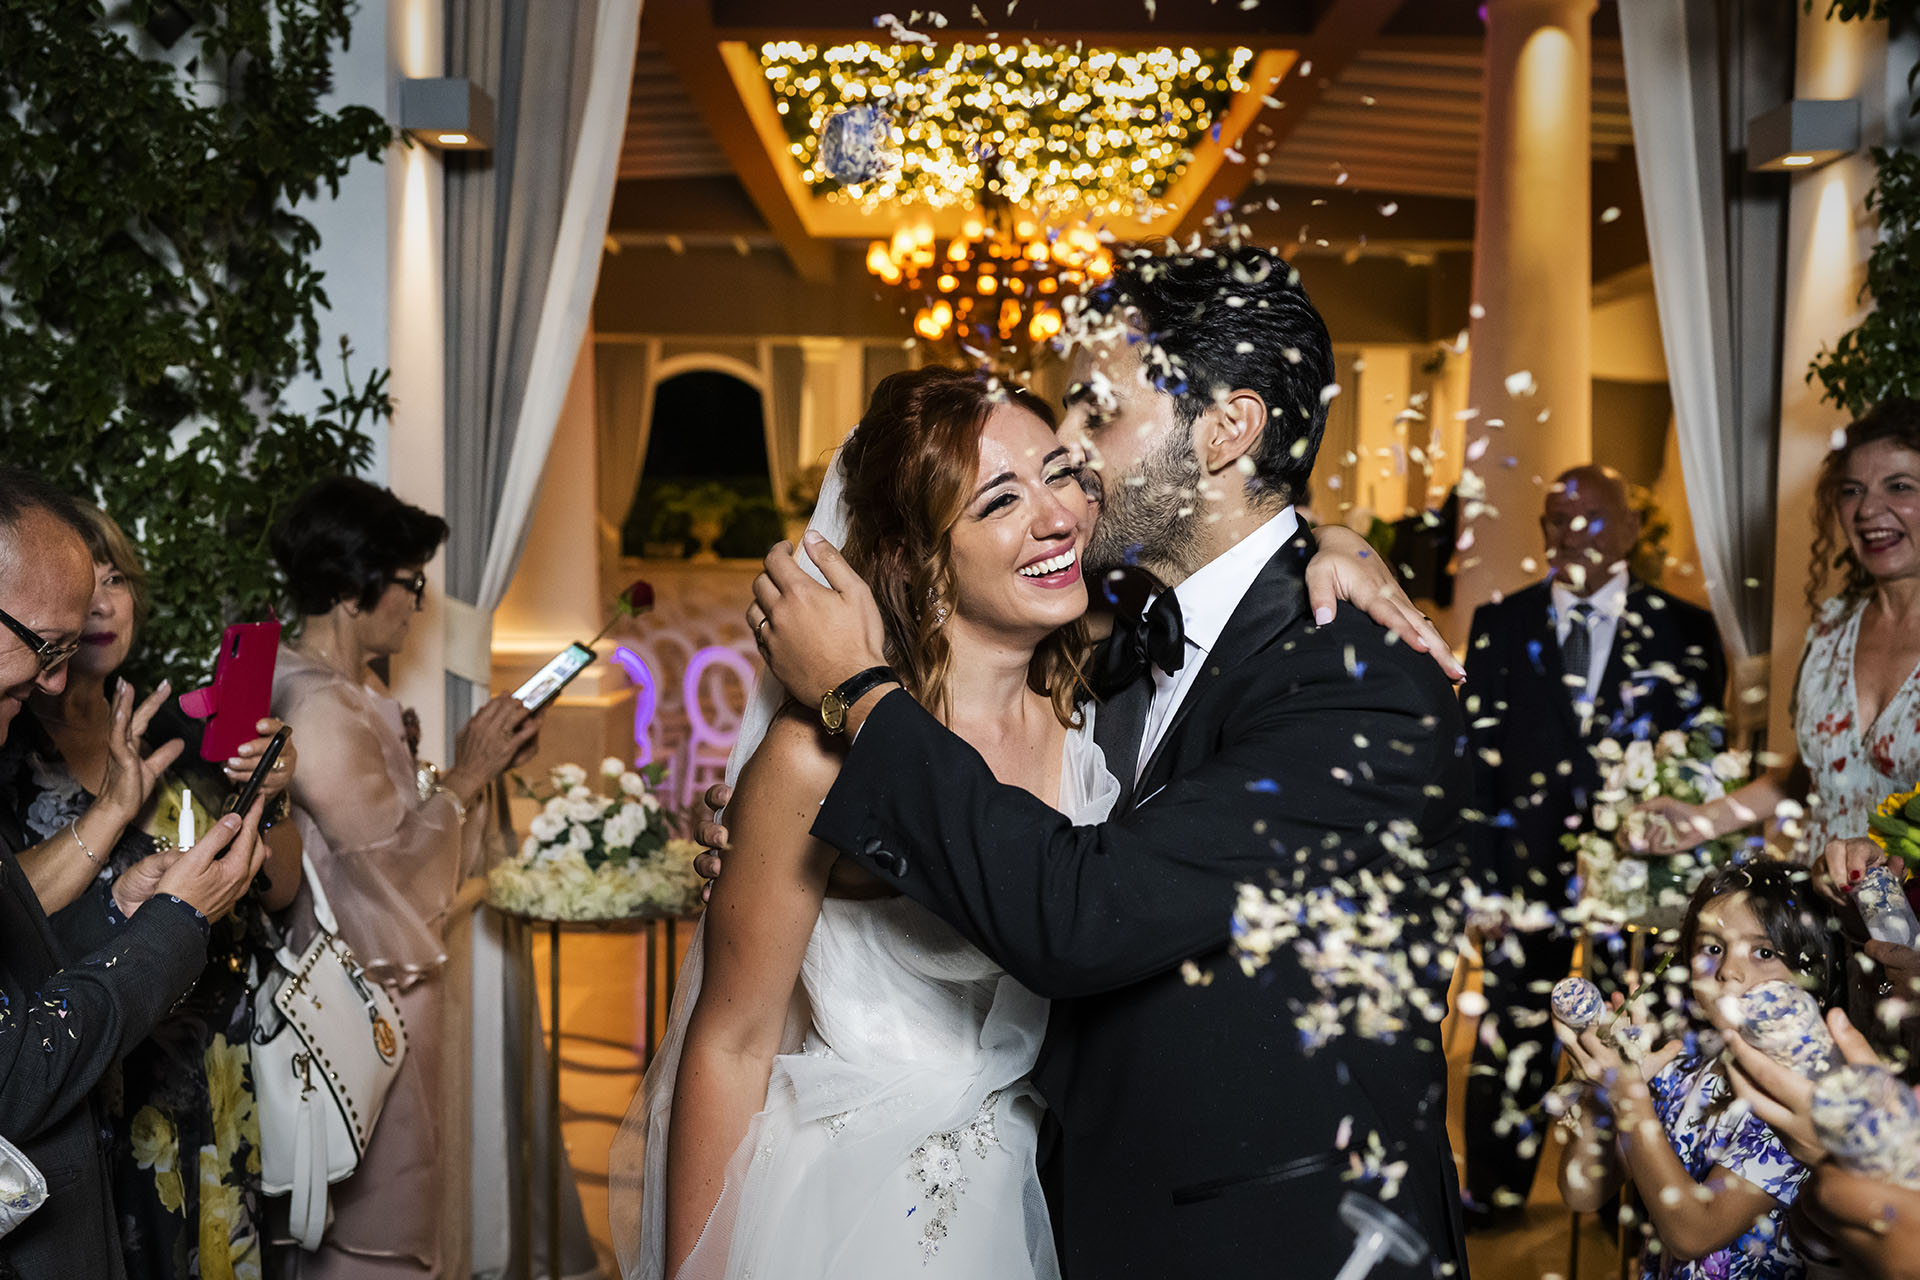 Puglia wedding, Destinatio wedding in Puglia, Puglia wedding photographer, Best Puglia wedding photographer